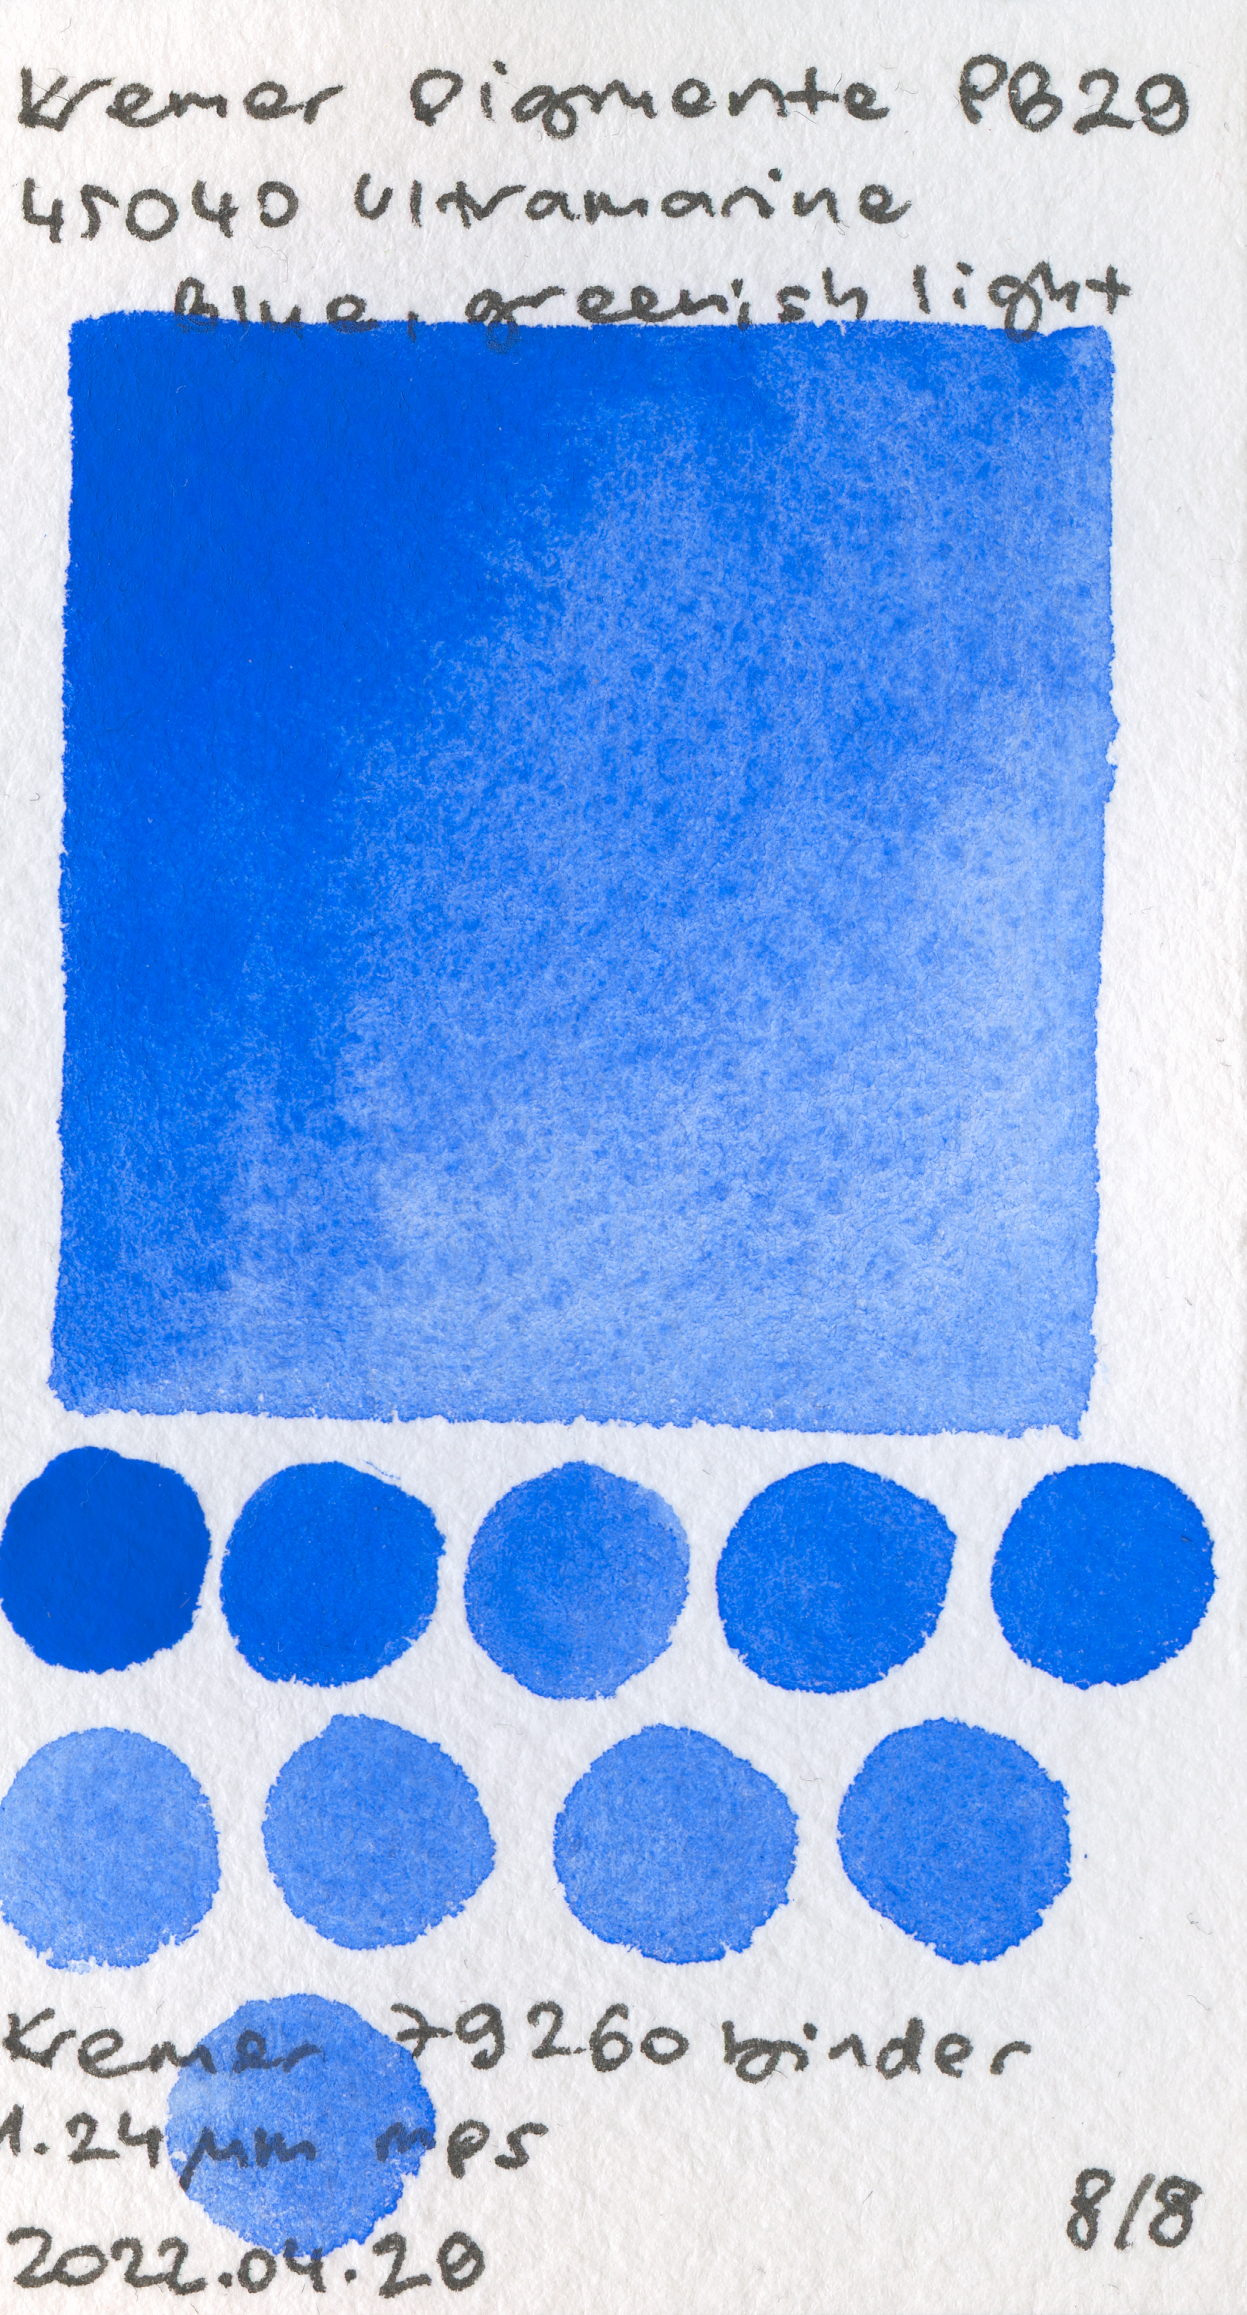 Kremer Pigmente [Dry] Pigments 45040 Ultramarine Blue, greenish light PB29 watercolor swatch